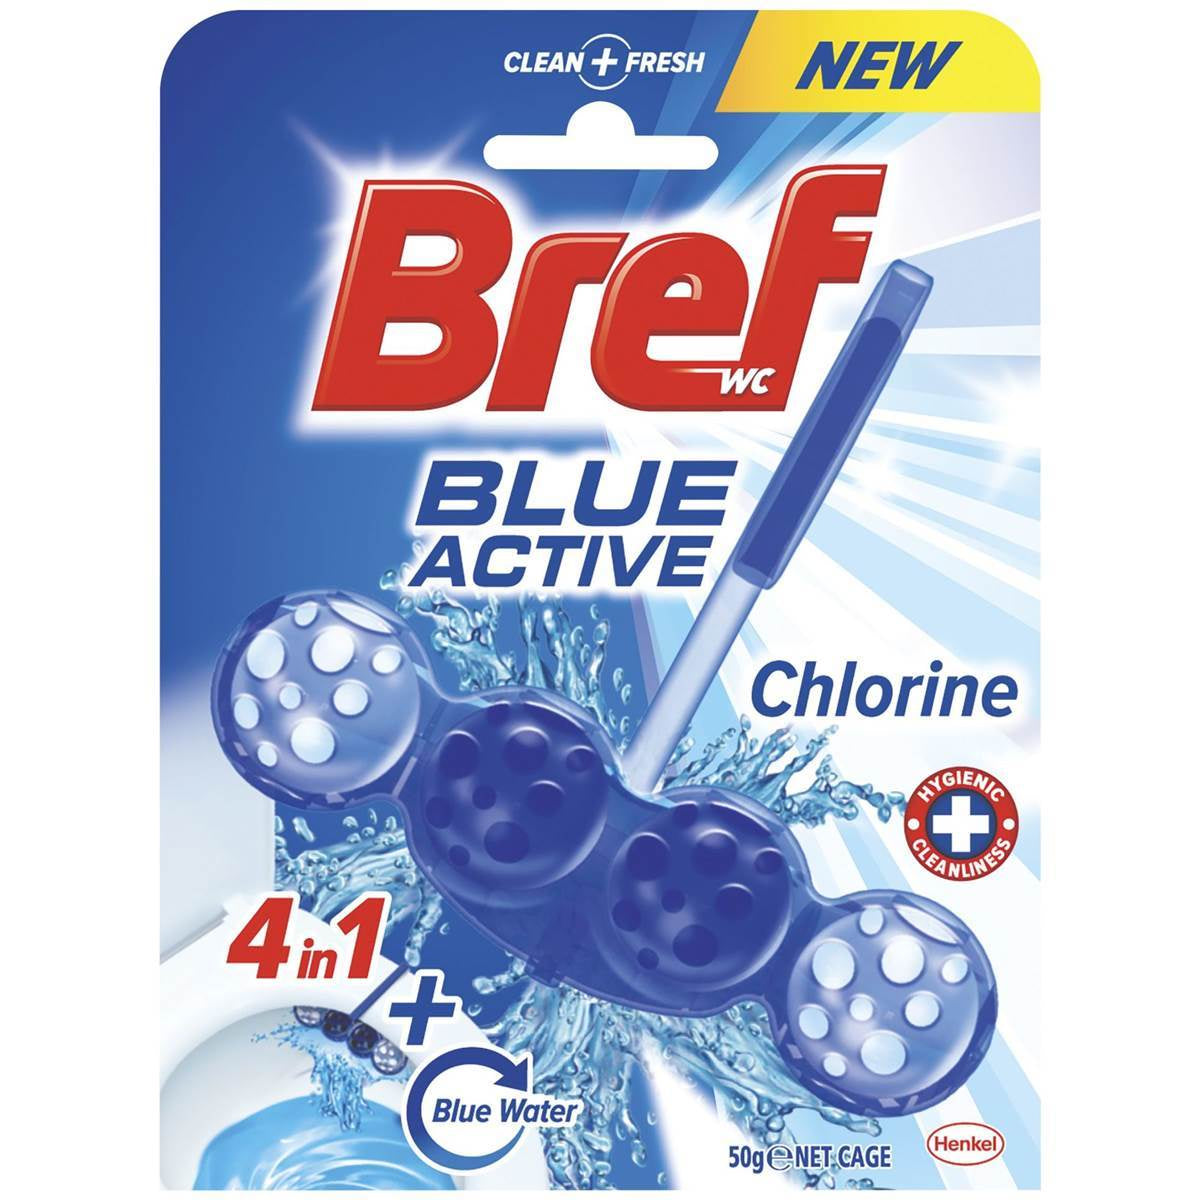 Bref Blue Active Chlorine Toilet Cleaner 50g